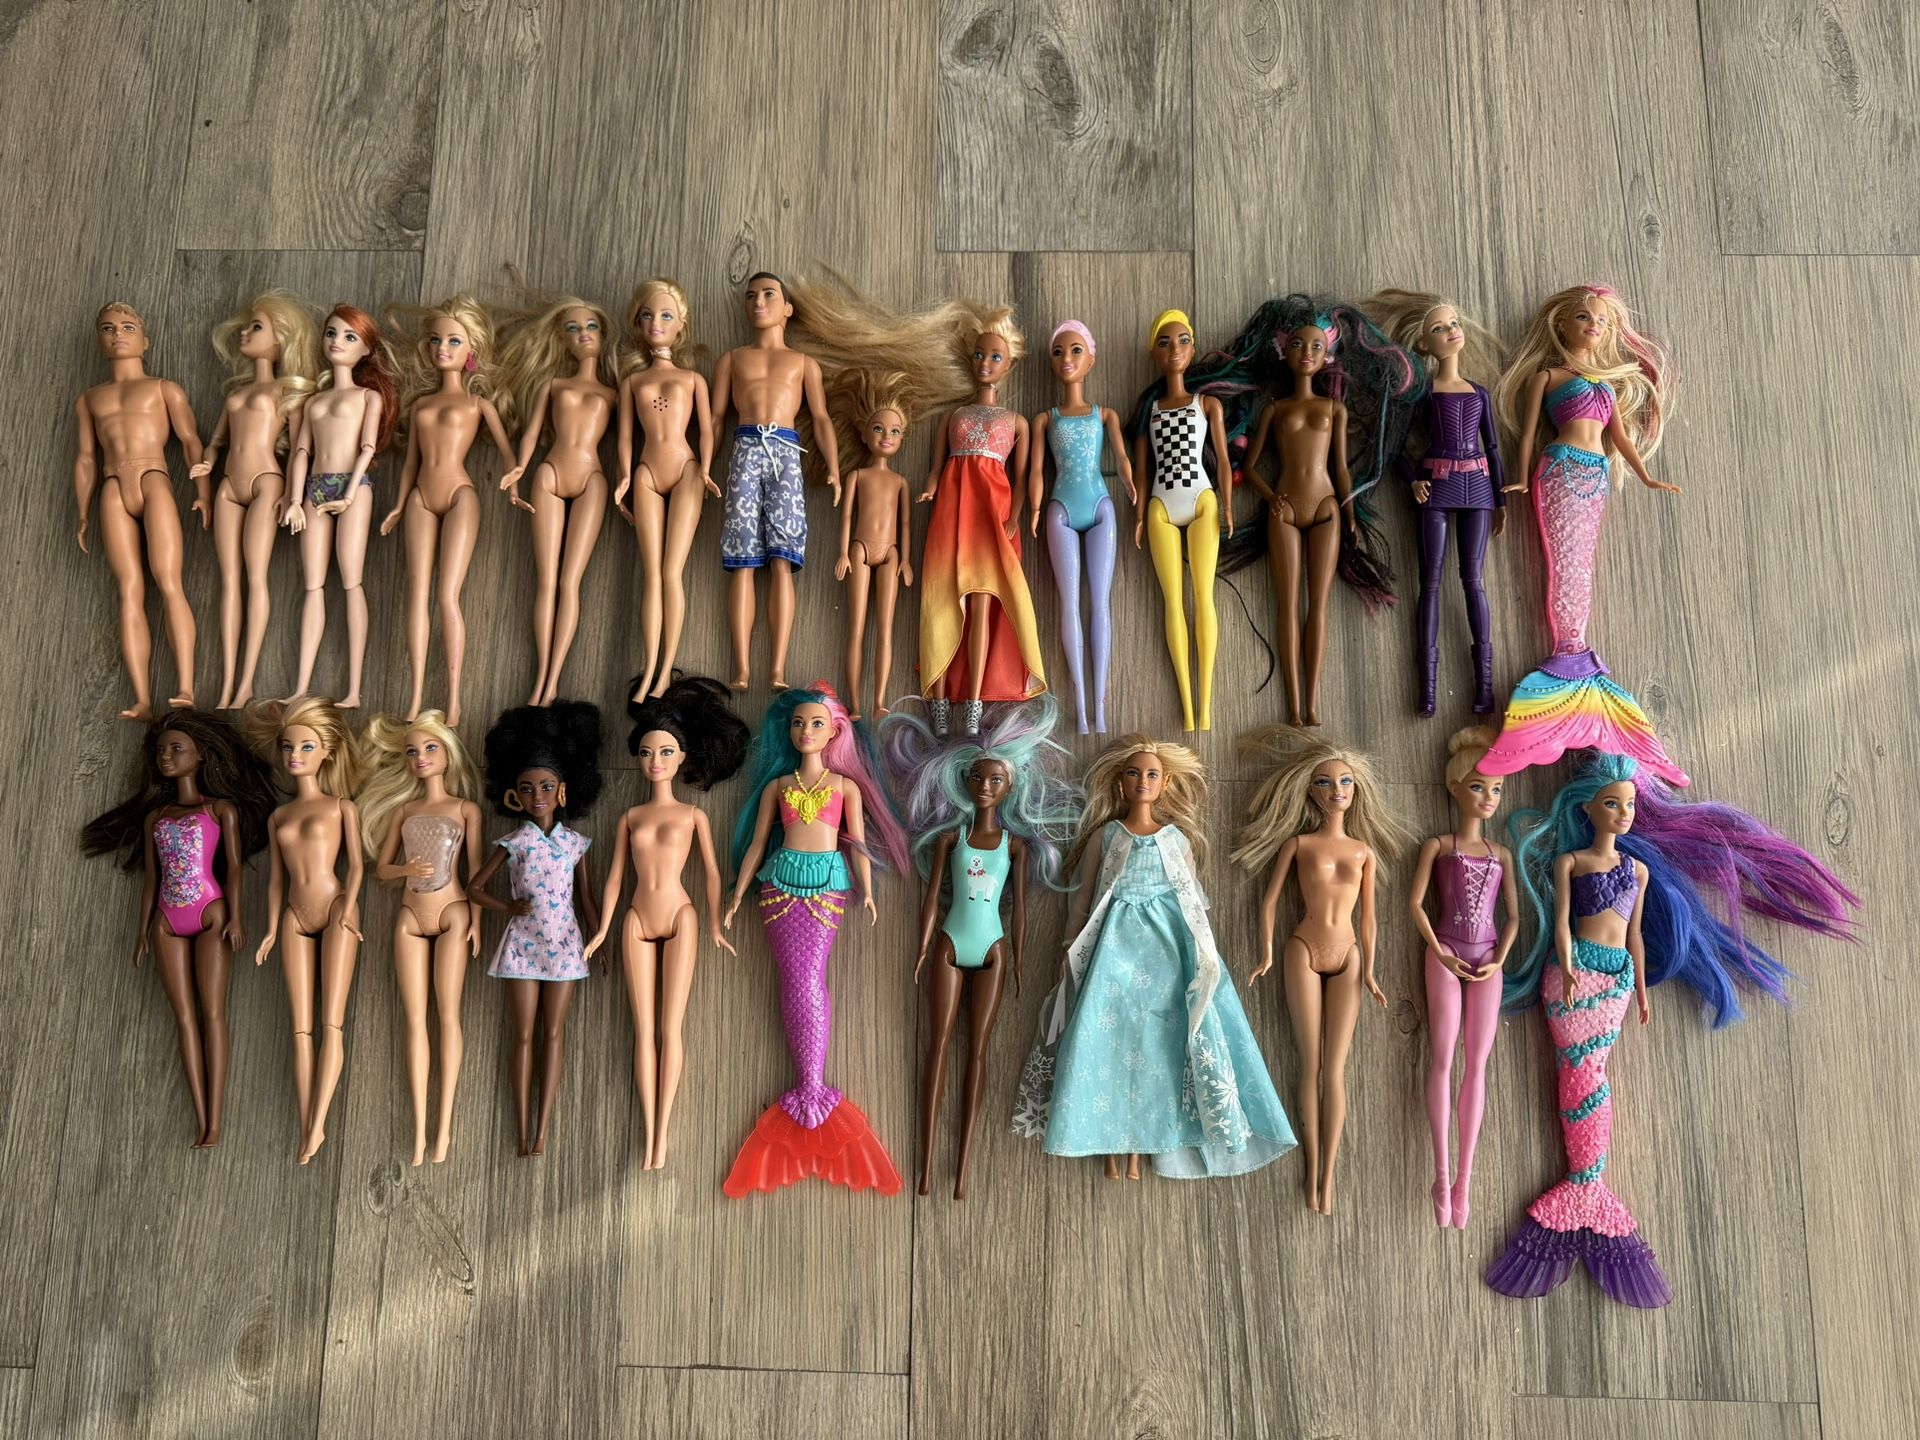 Barbie Doll Lot